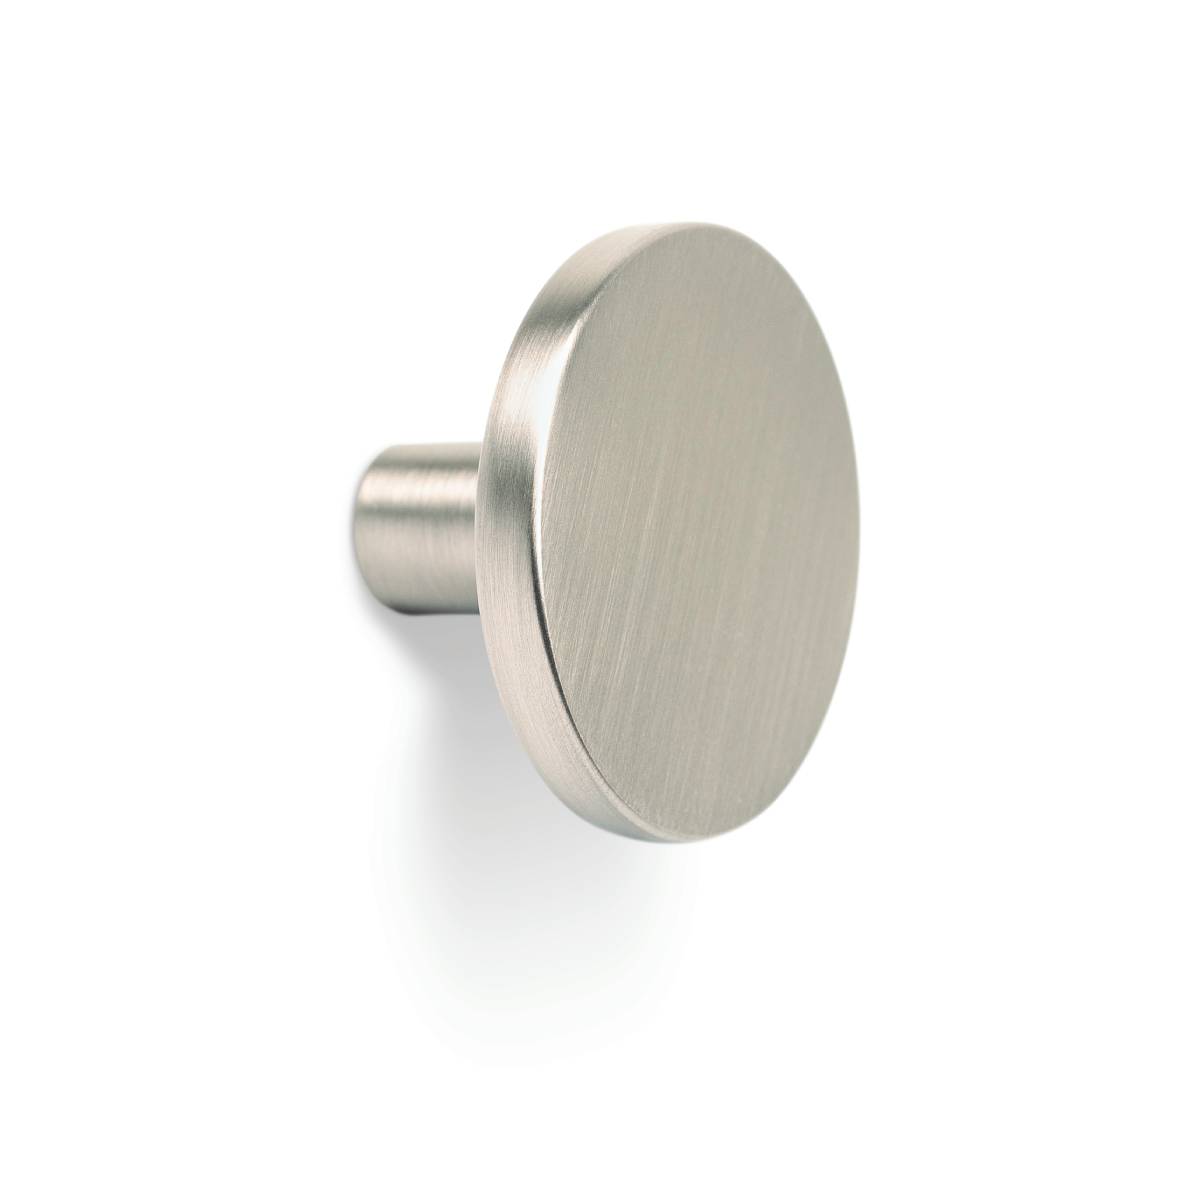 Diamètre de 20mm par Oppali Lot de 5 Globe Nickel Satiné de Tiroir Boutons de Porte de Placard de Cuisine Poignée de Meuble 